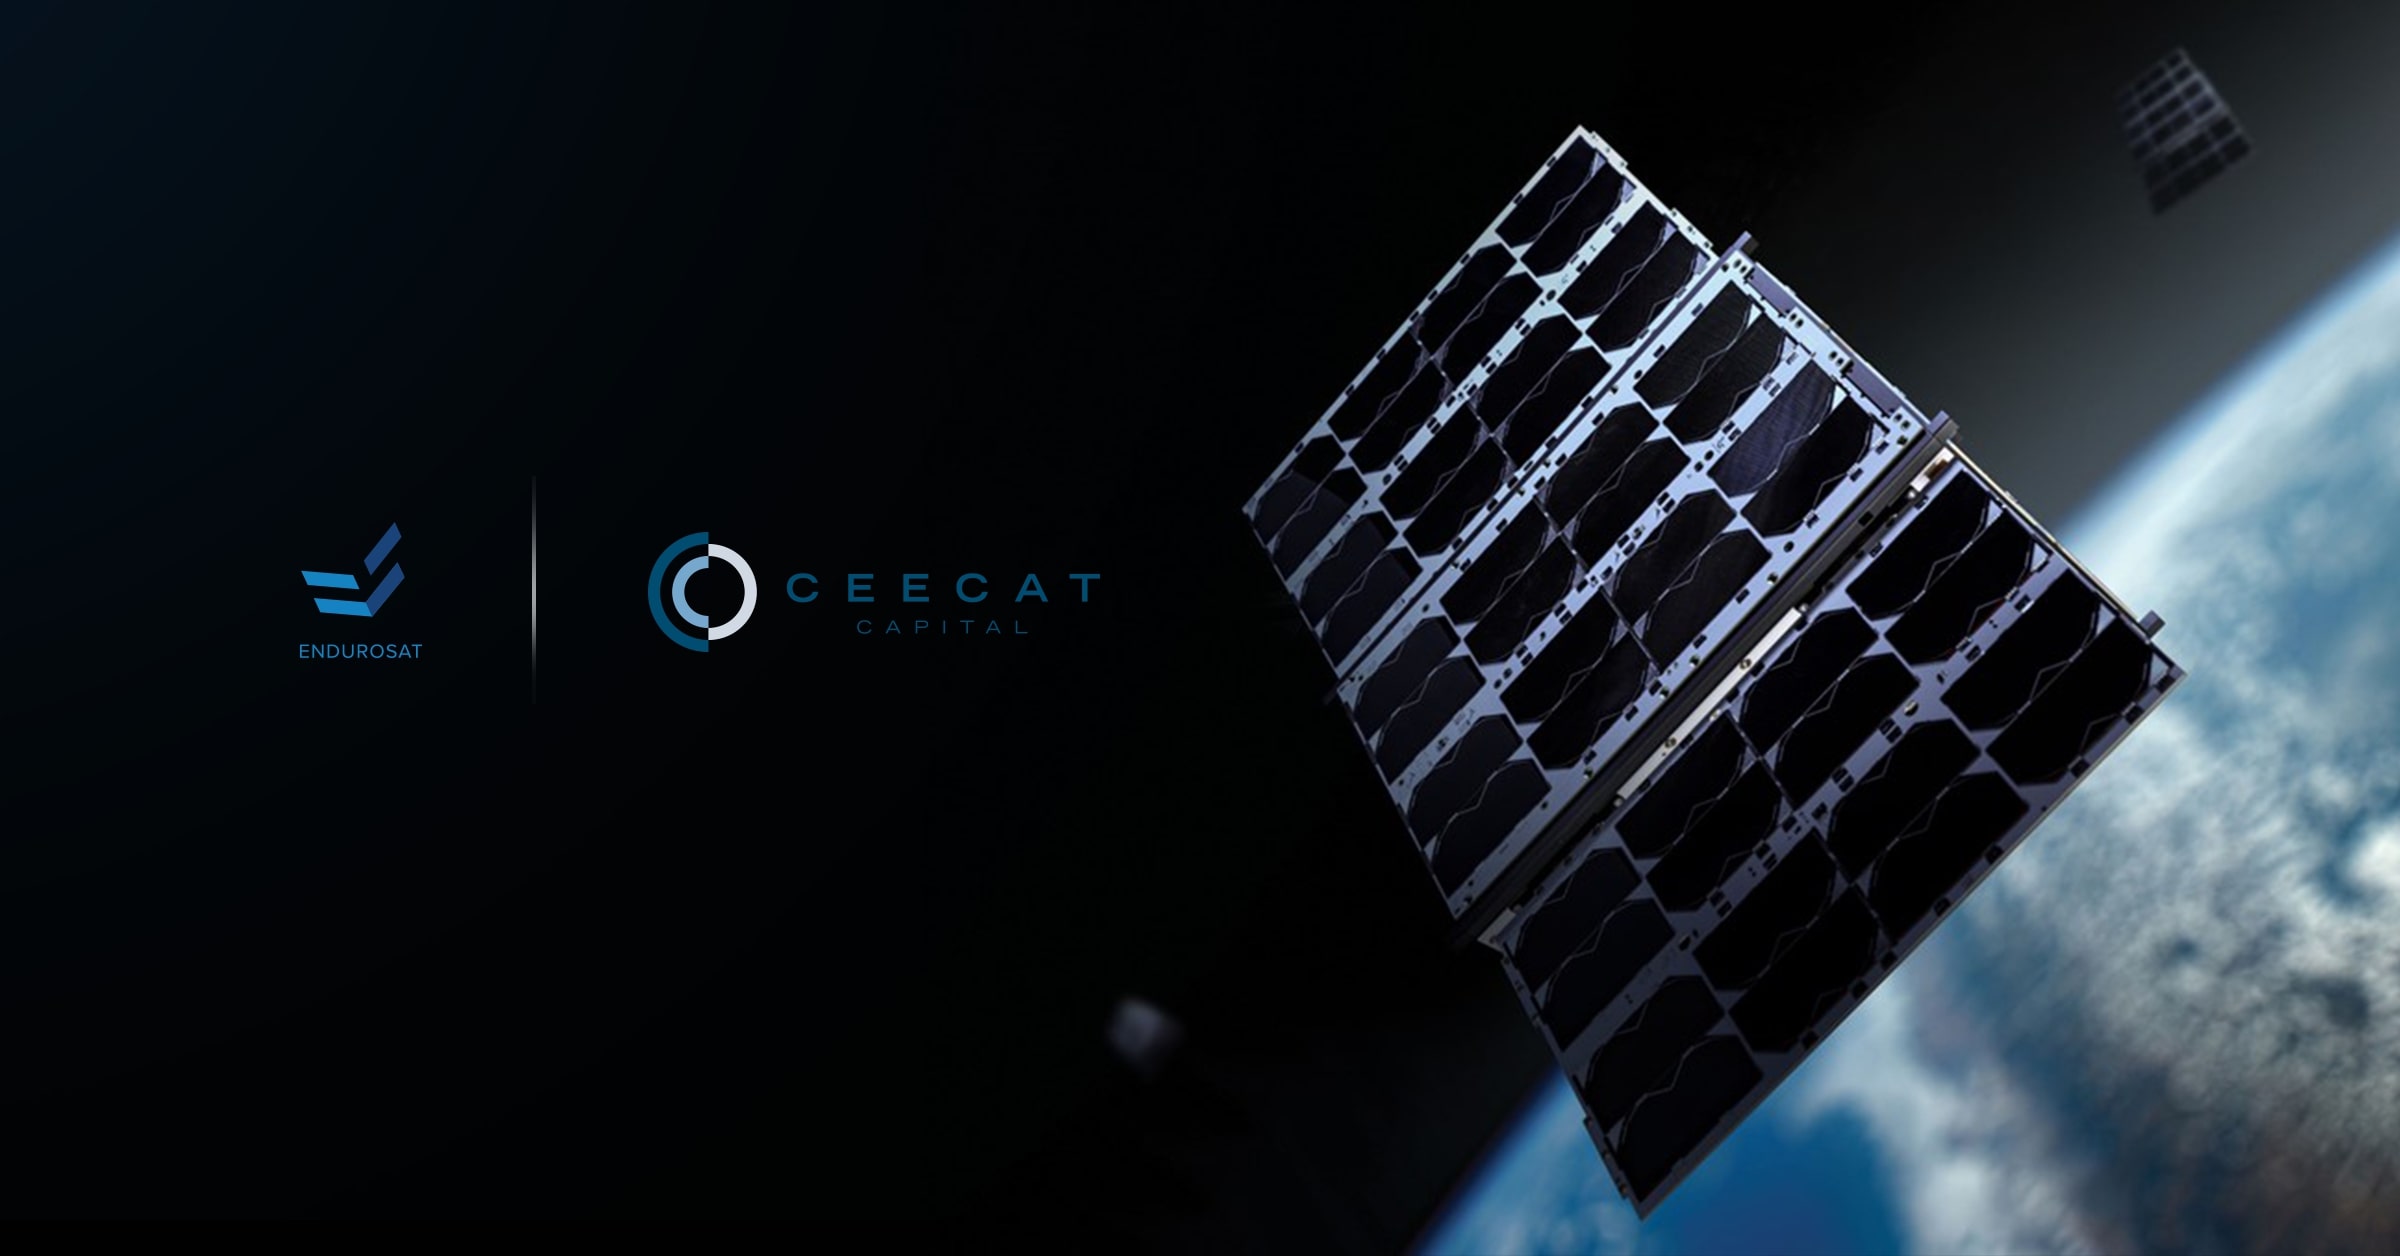 EnduroSat raises 10m USD Series A led by CEECAT Capital